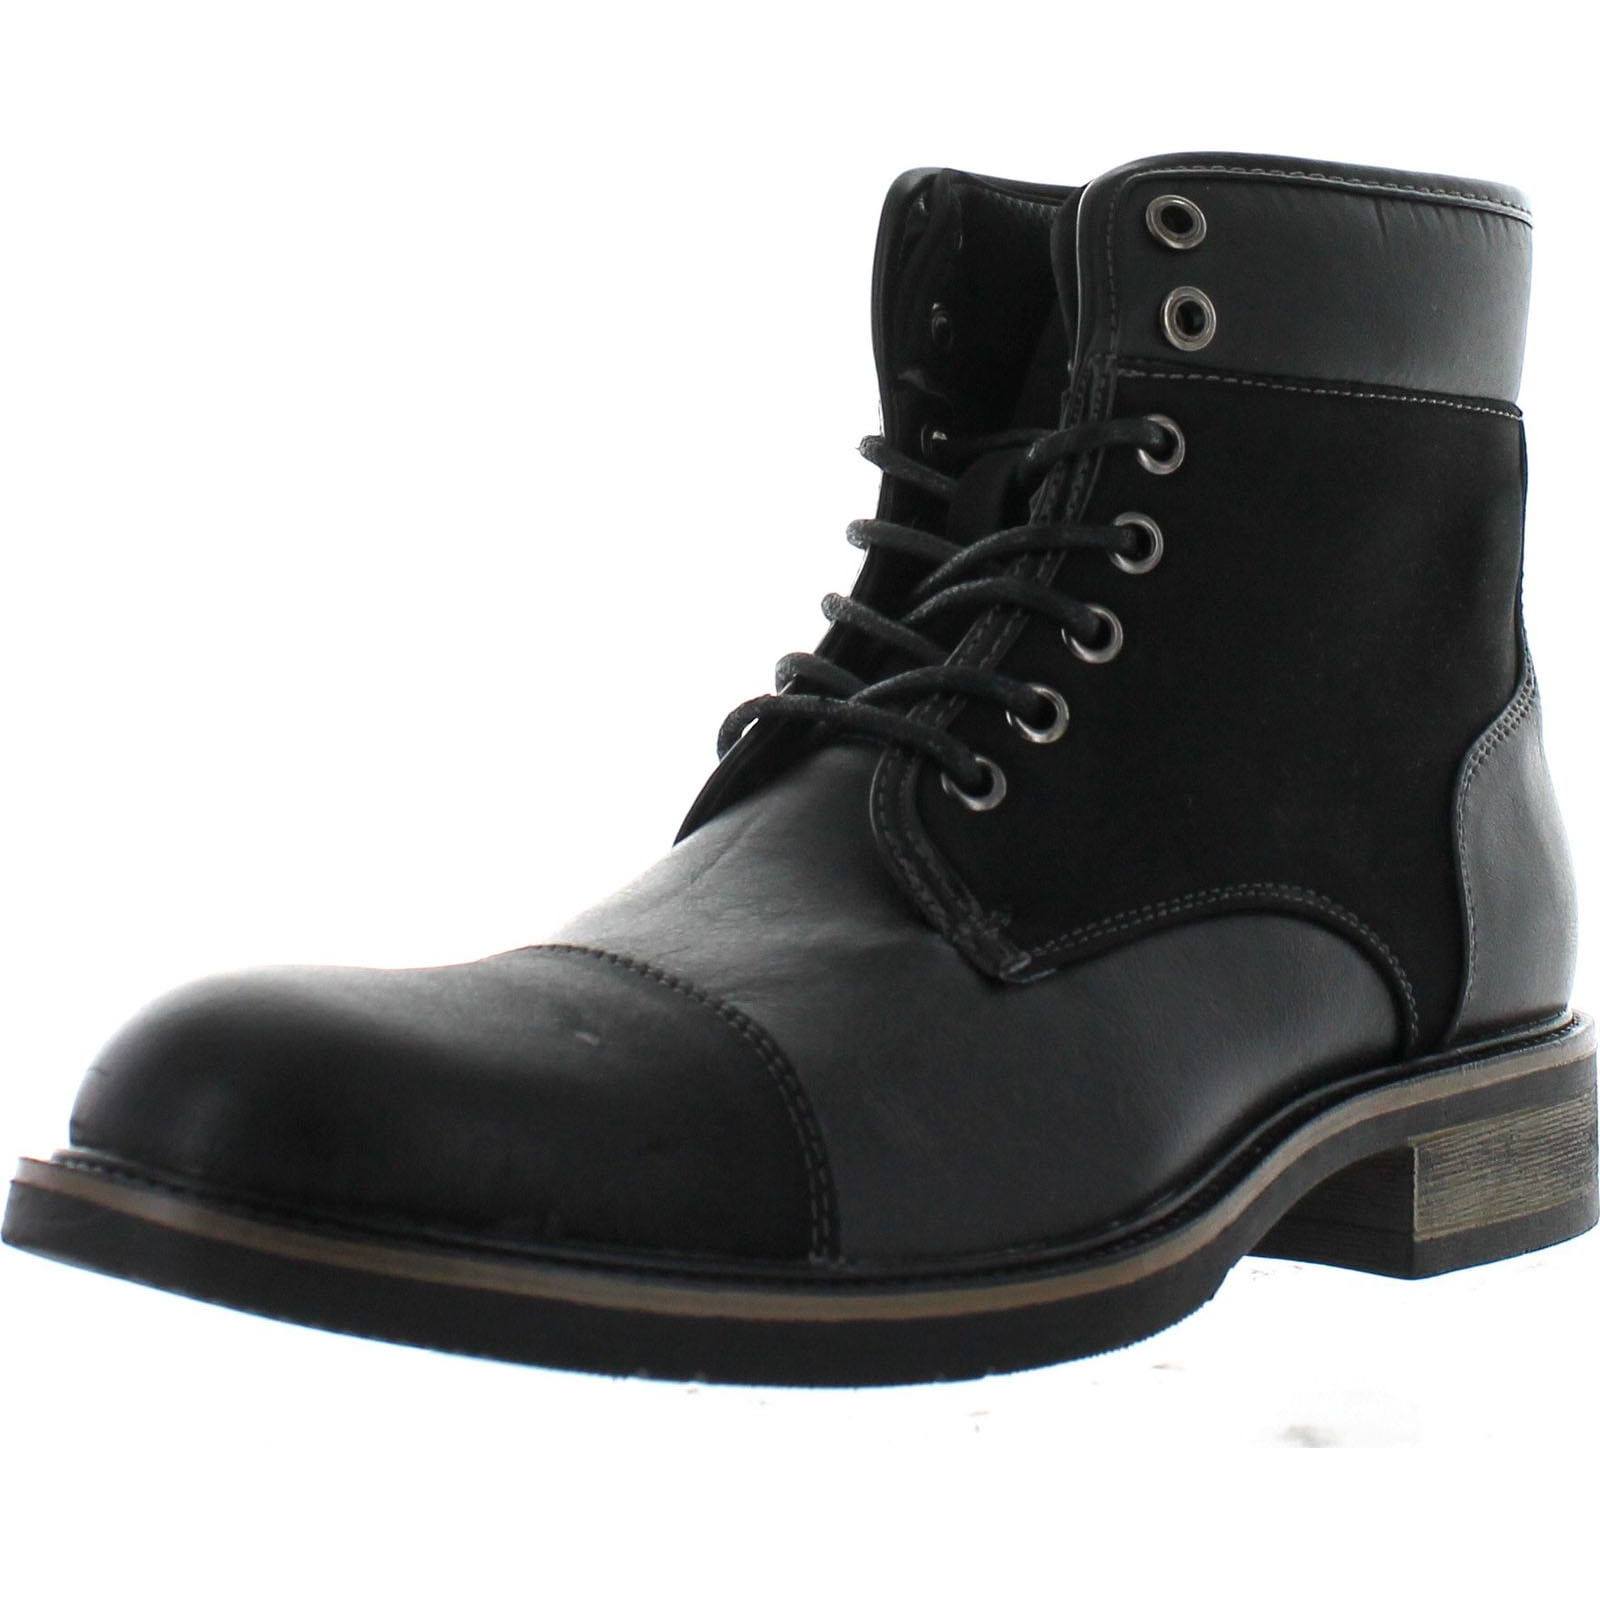 arider boots